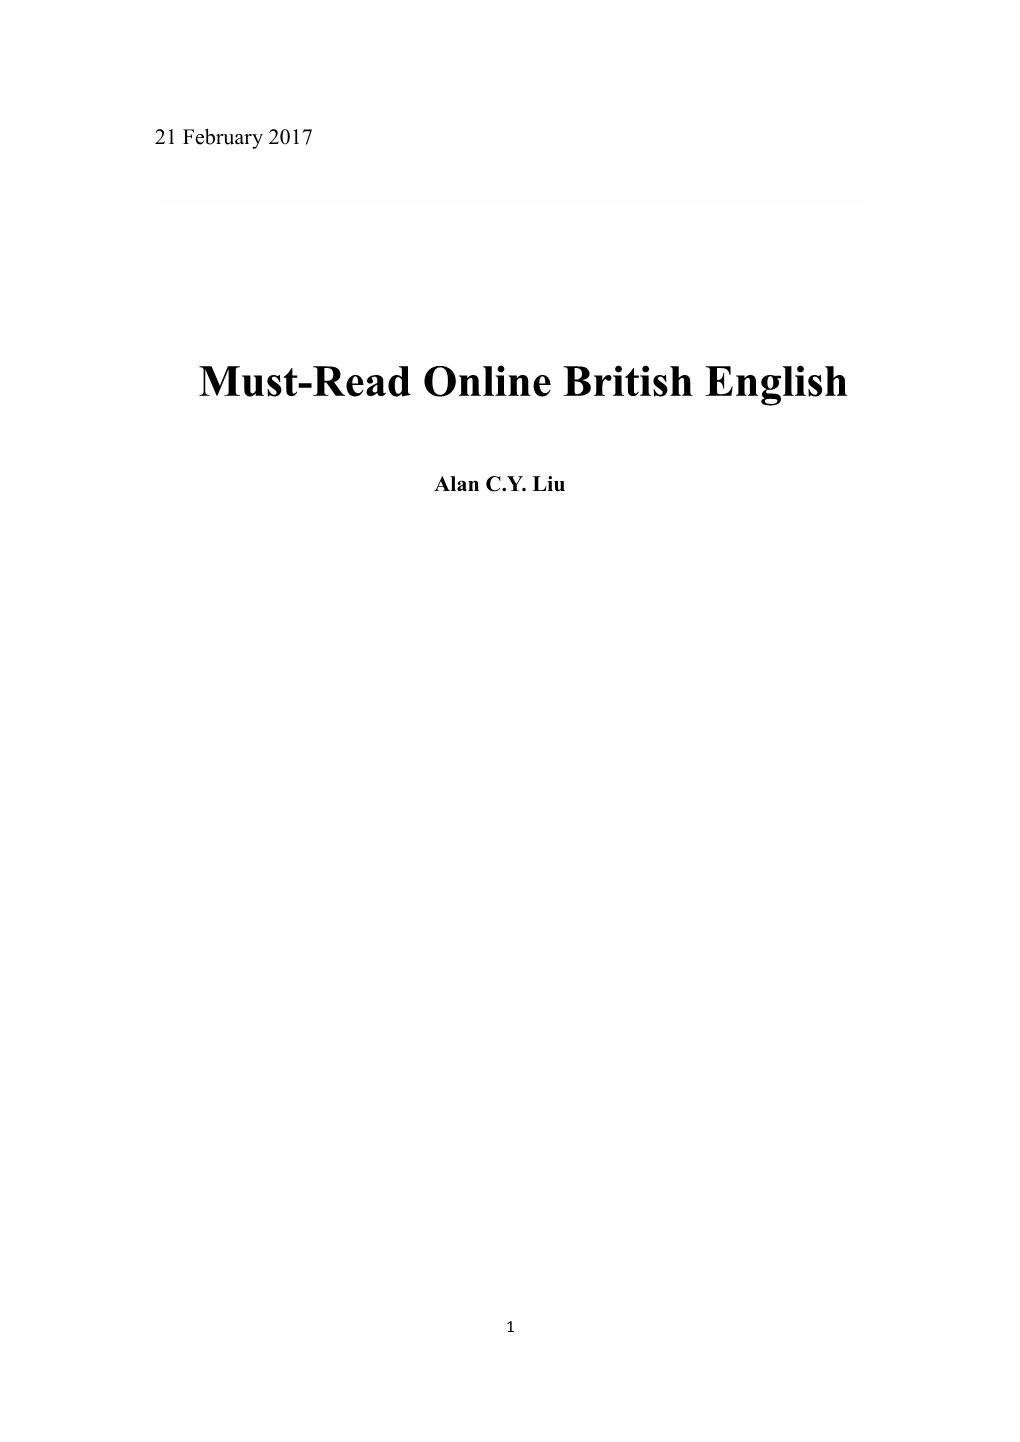 Must-Read Online British English